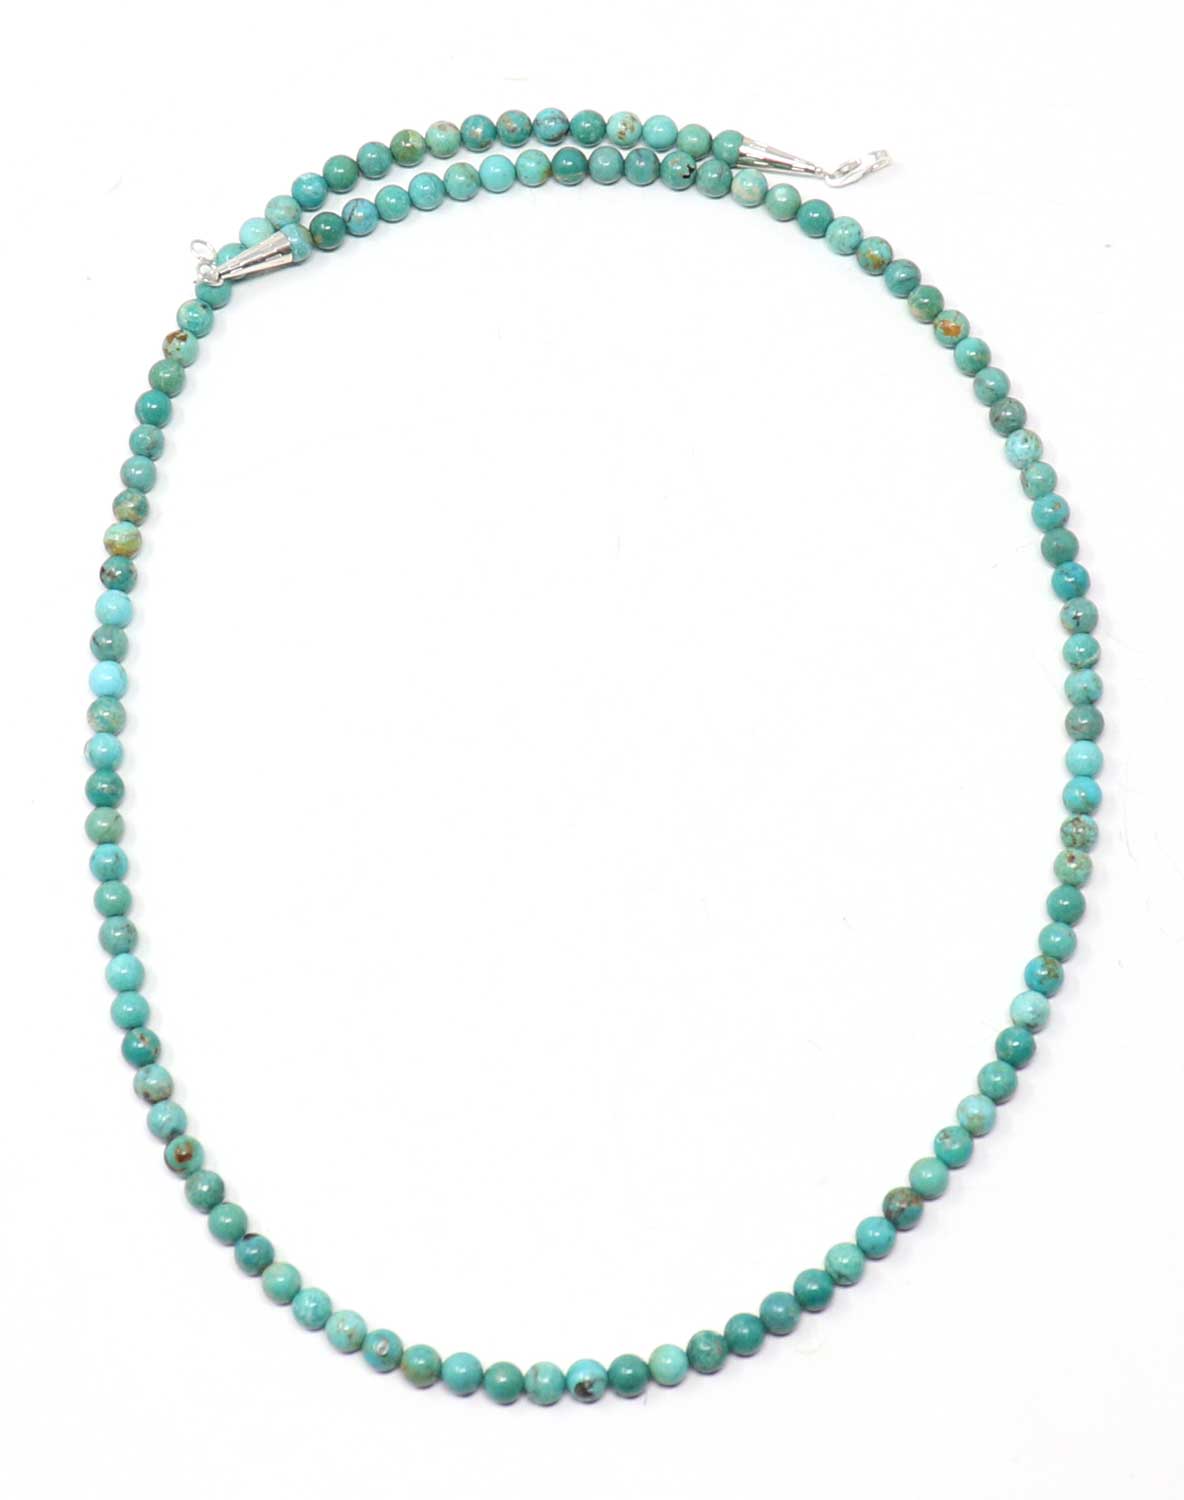 24" Round Turquoise Bead Necklace